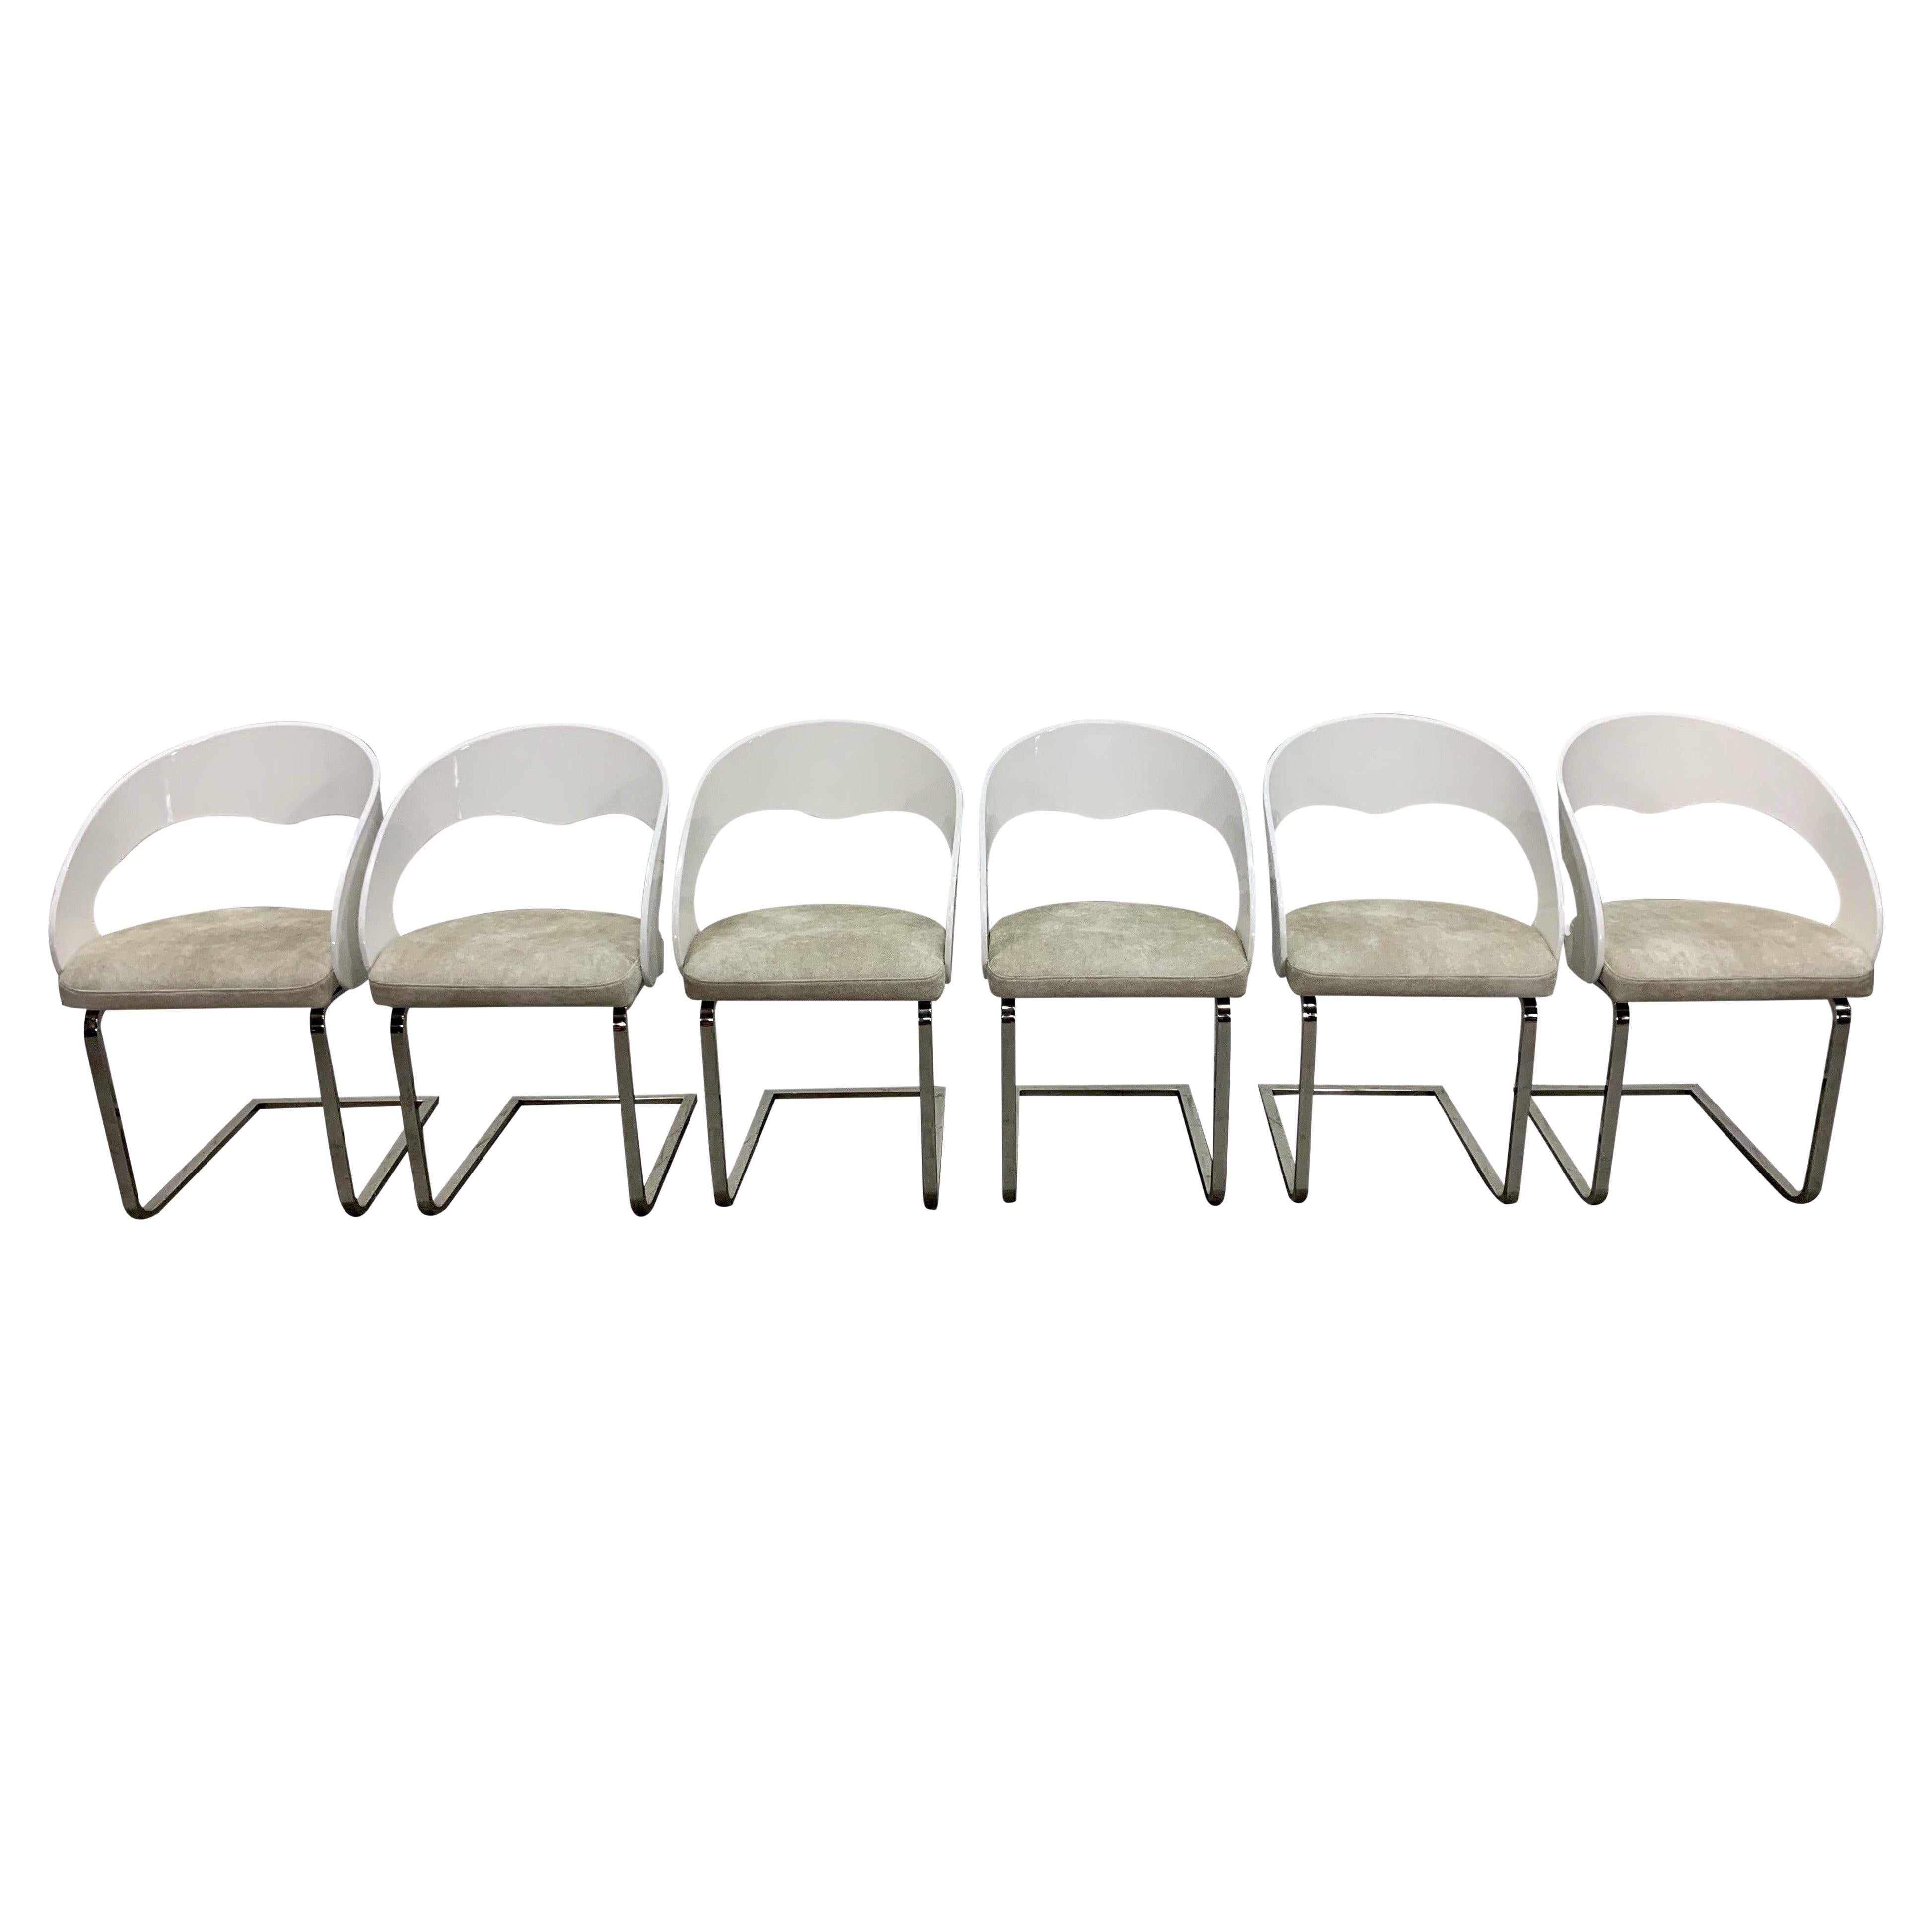 Eero Saarinen Styled Contemporary Dining Chairs - Set of 6